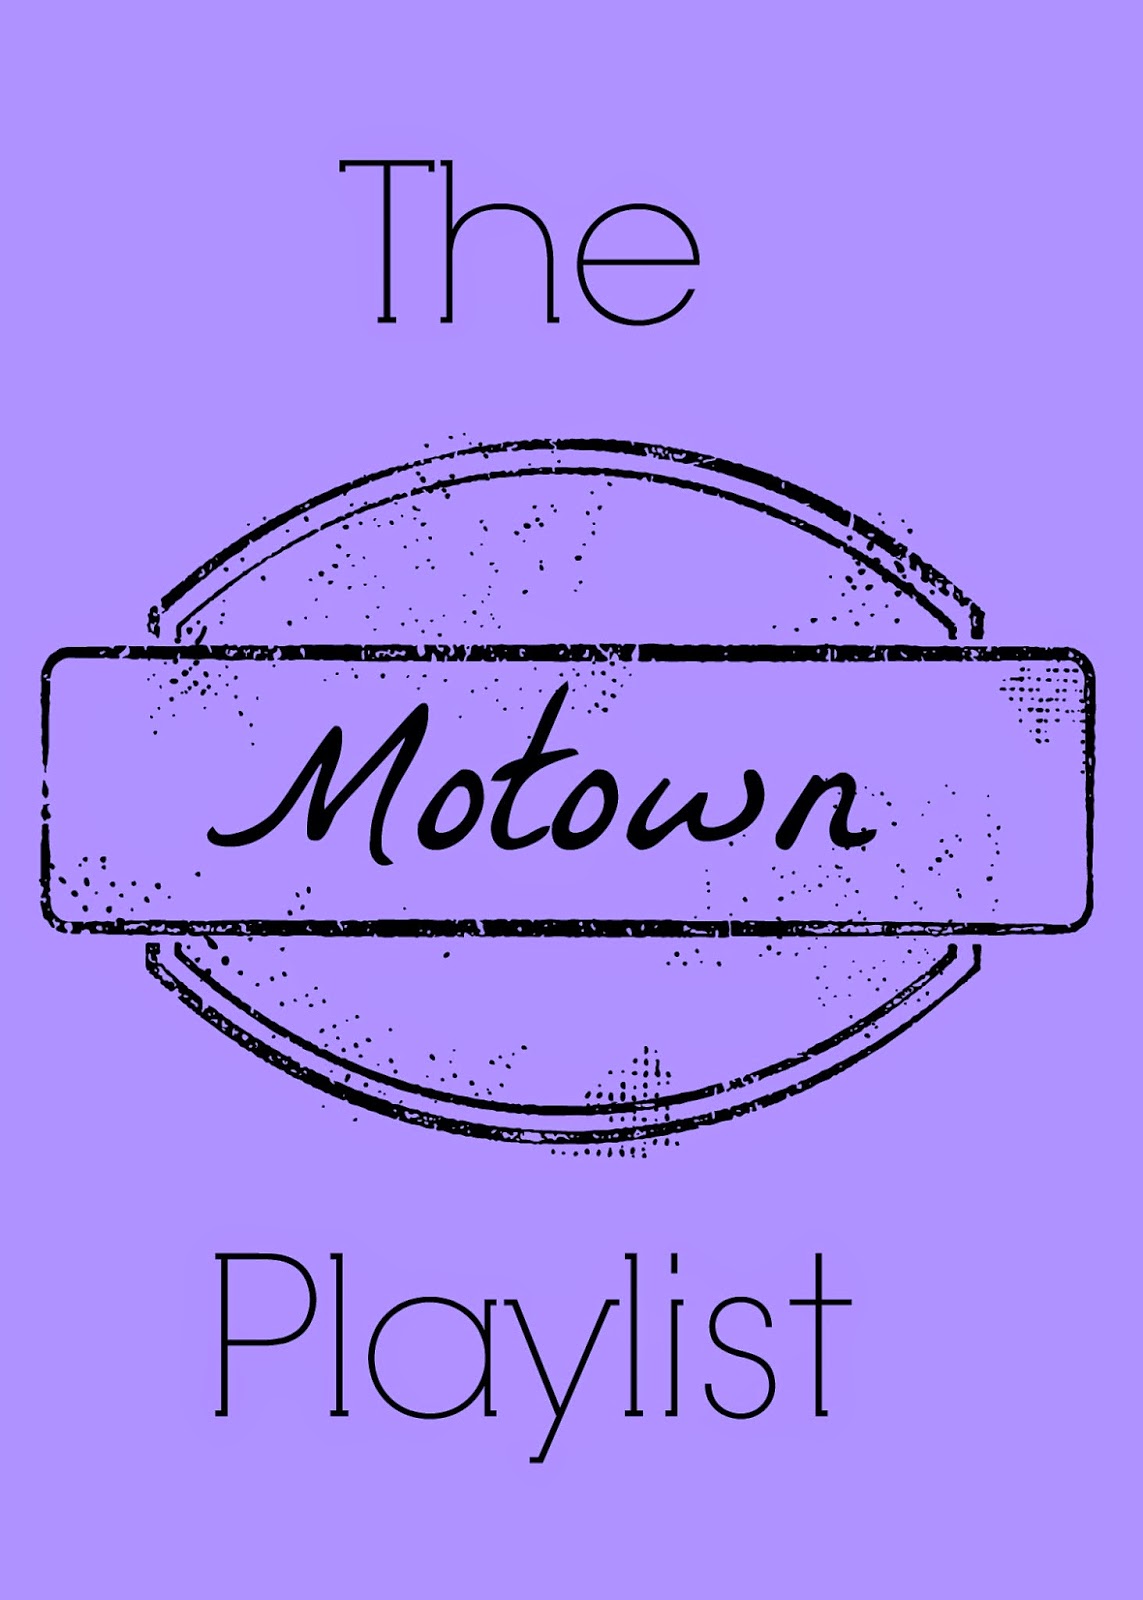 The Motown Playlist